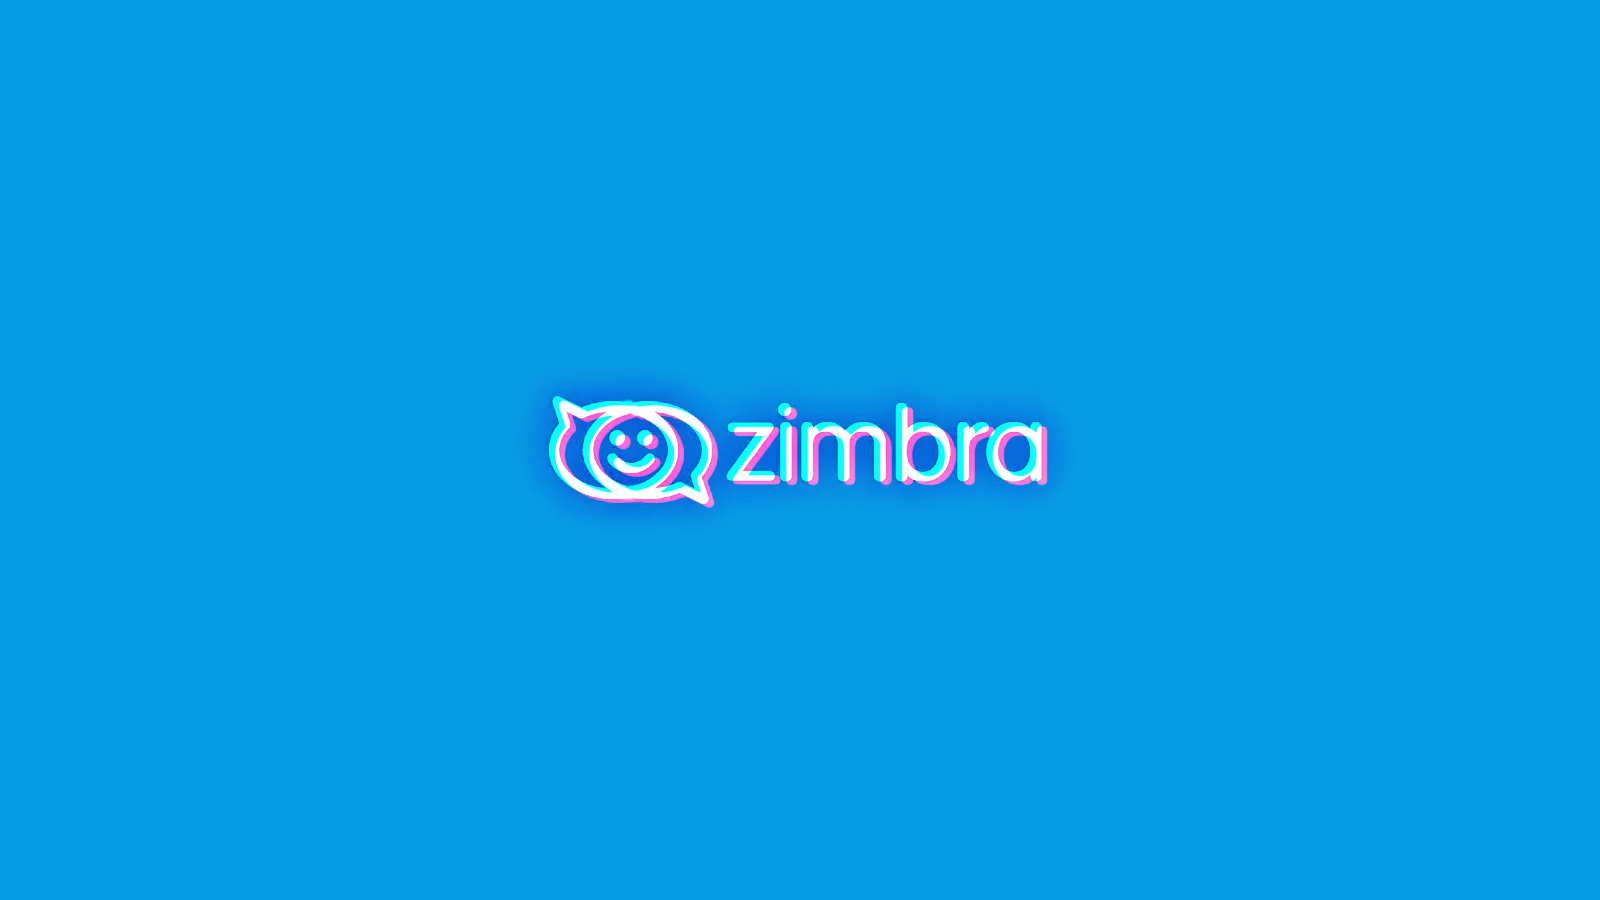 Zimbra btc sports betting sites nfl scores